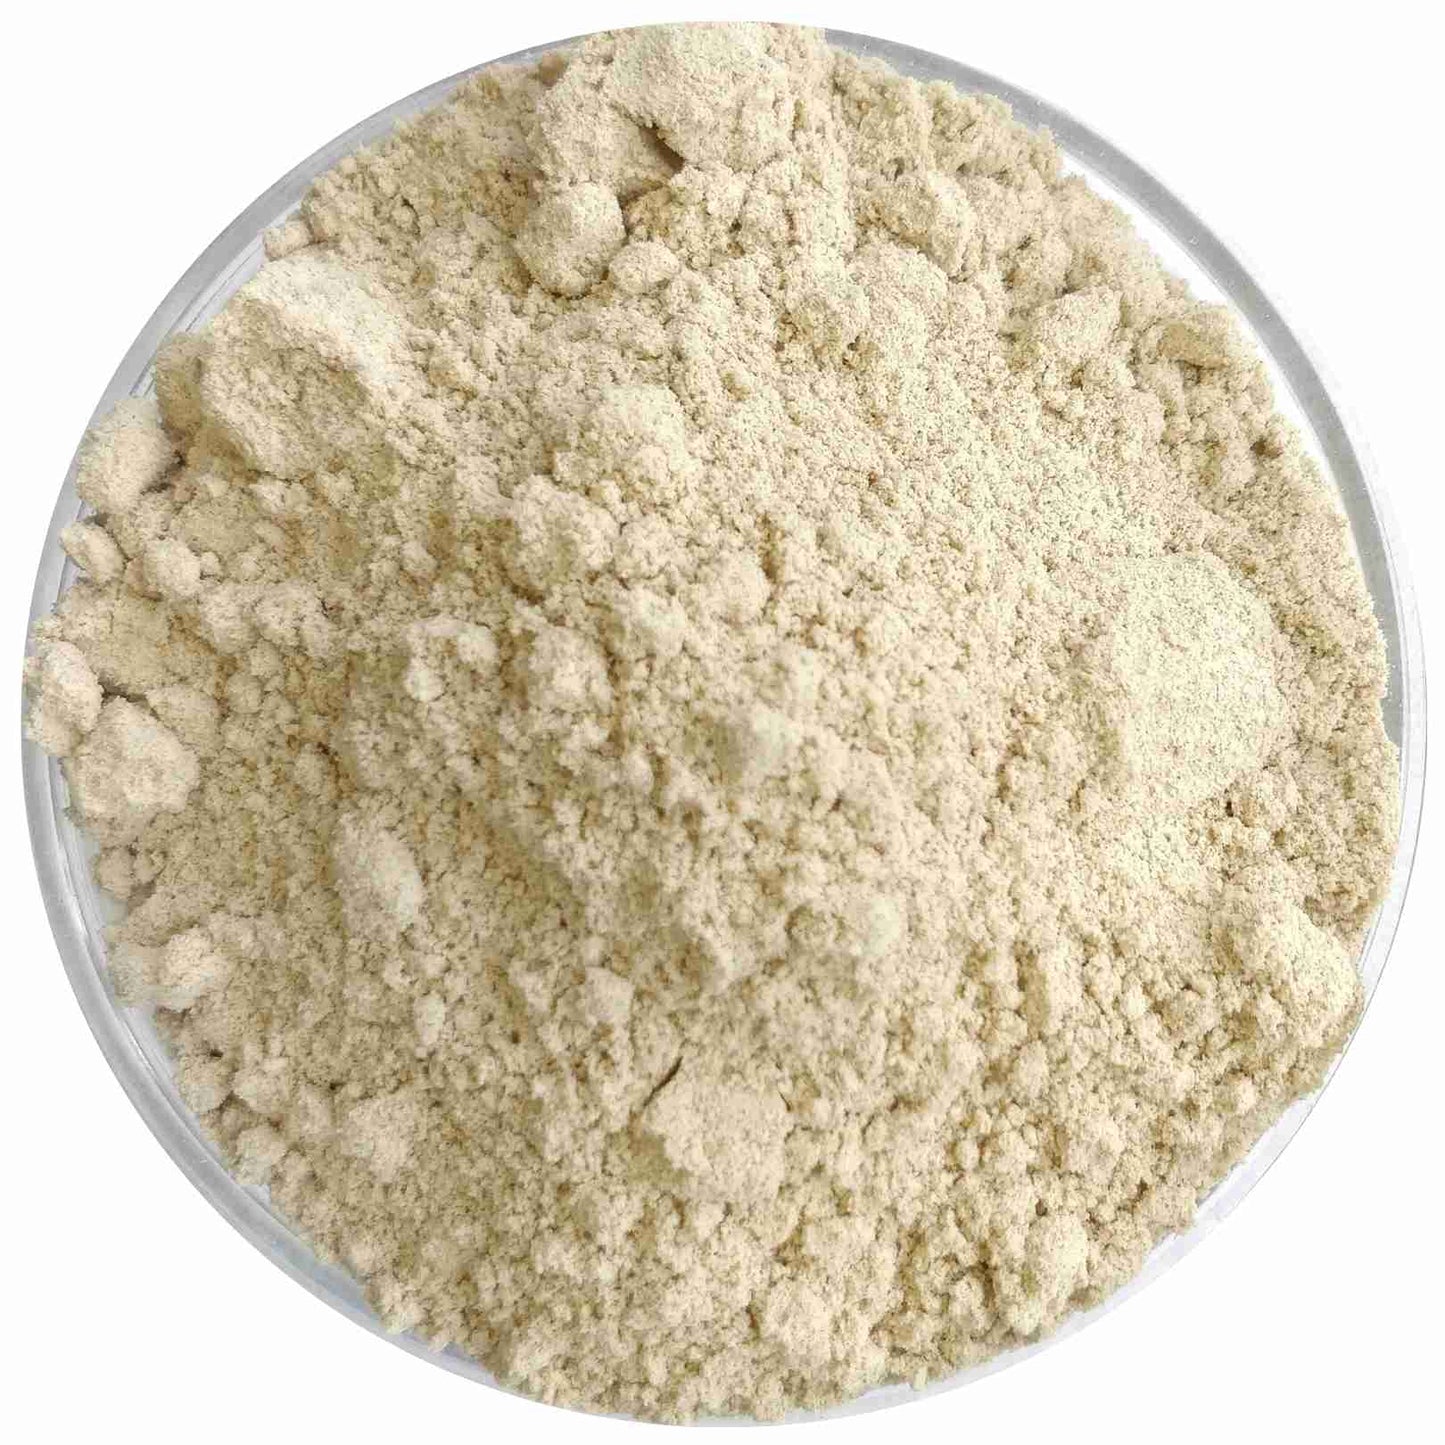 
                  
                    Millet Amma Organic Kodo Flour (500g)
                  
                